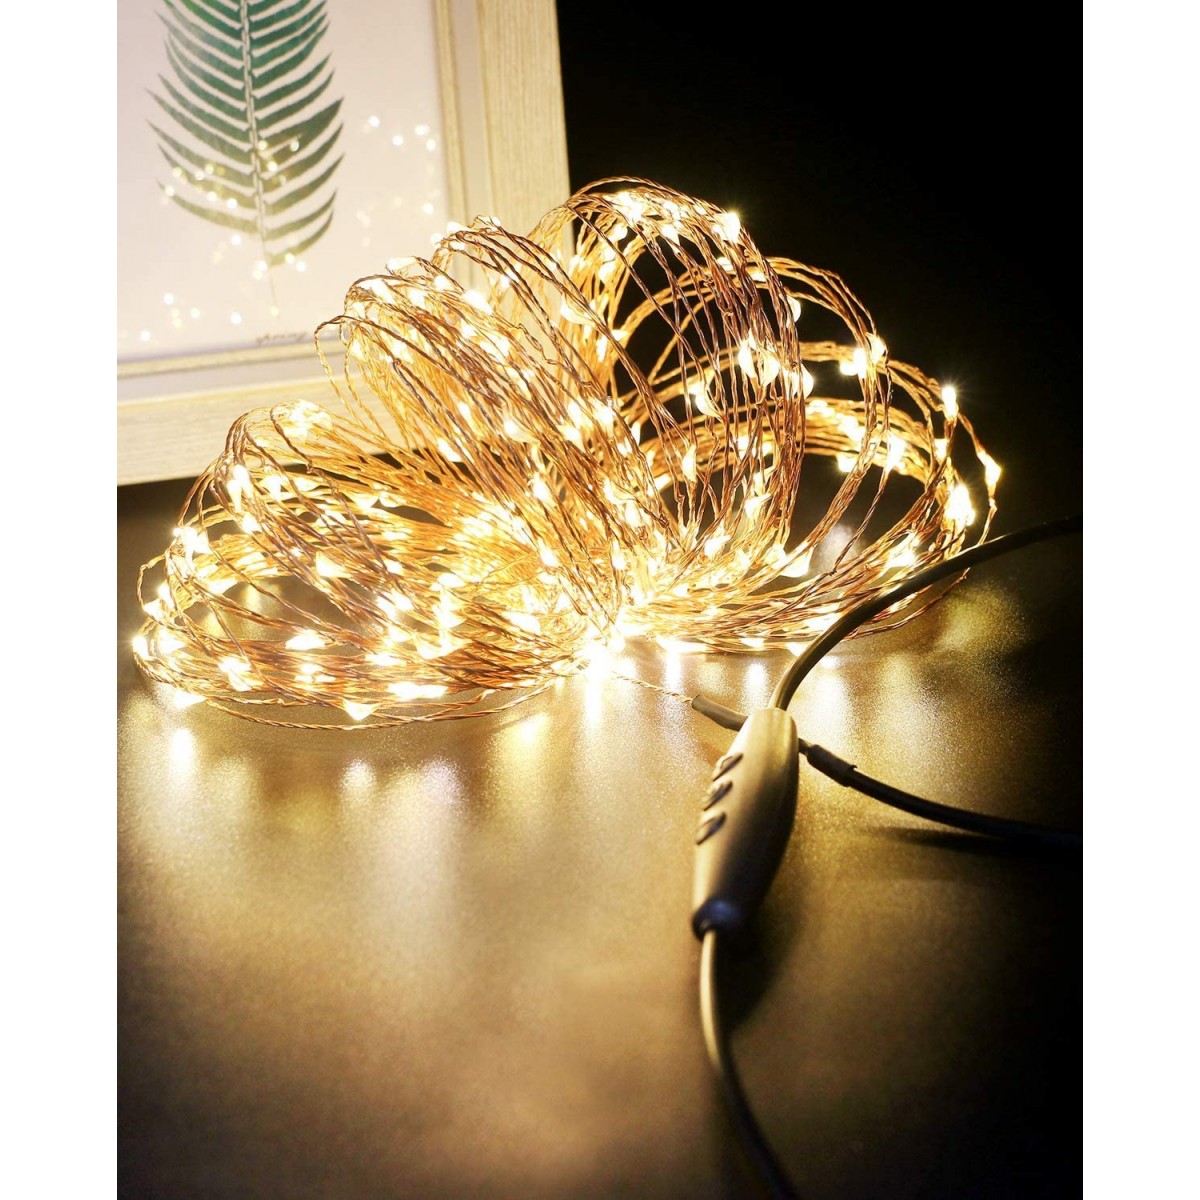 ⭐ Catena Luci 240 LED per albero di Natale, impermeabili, filo di rame